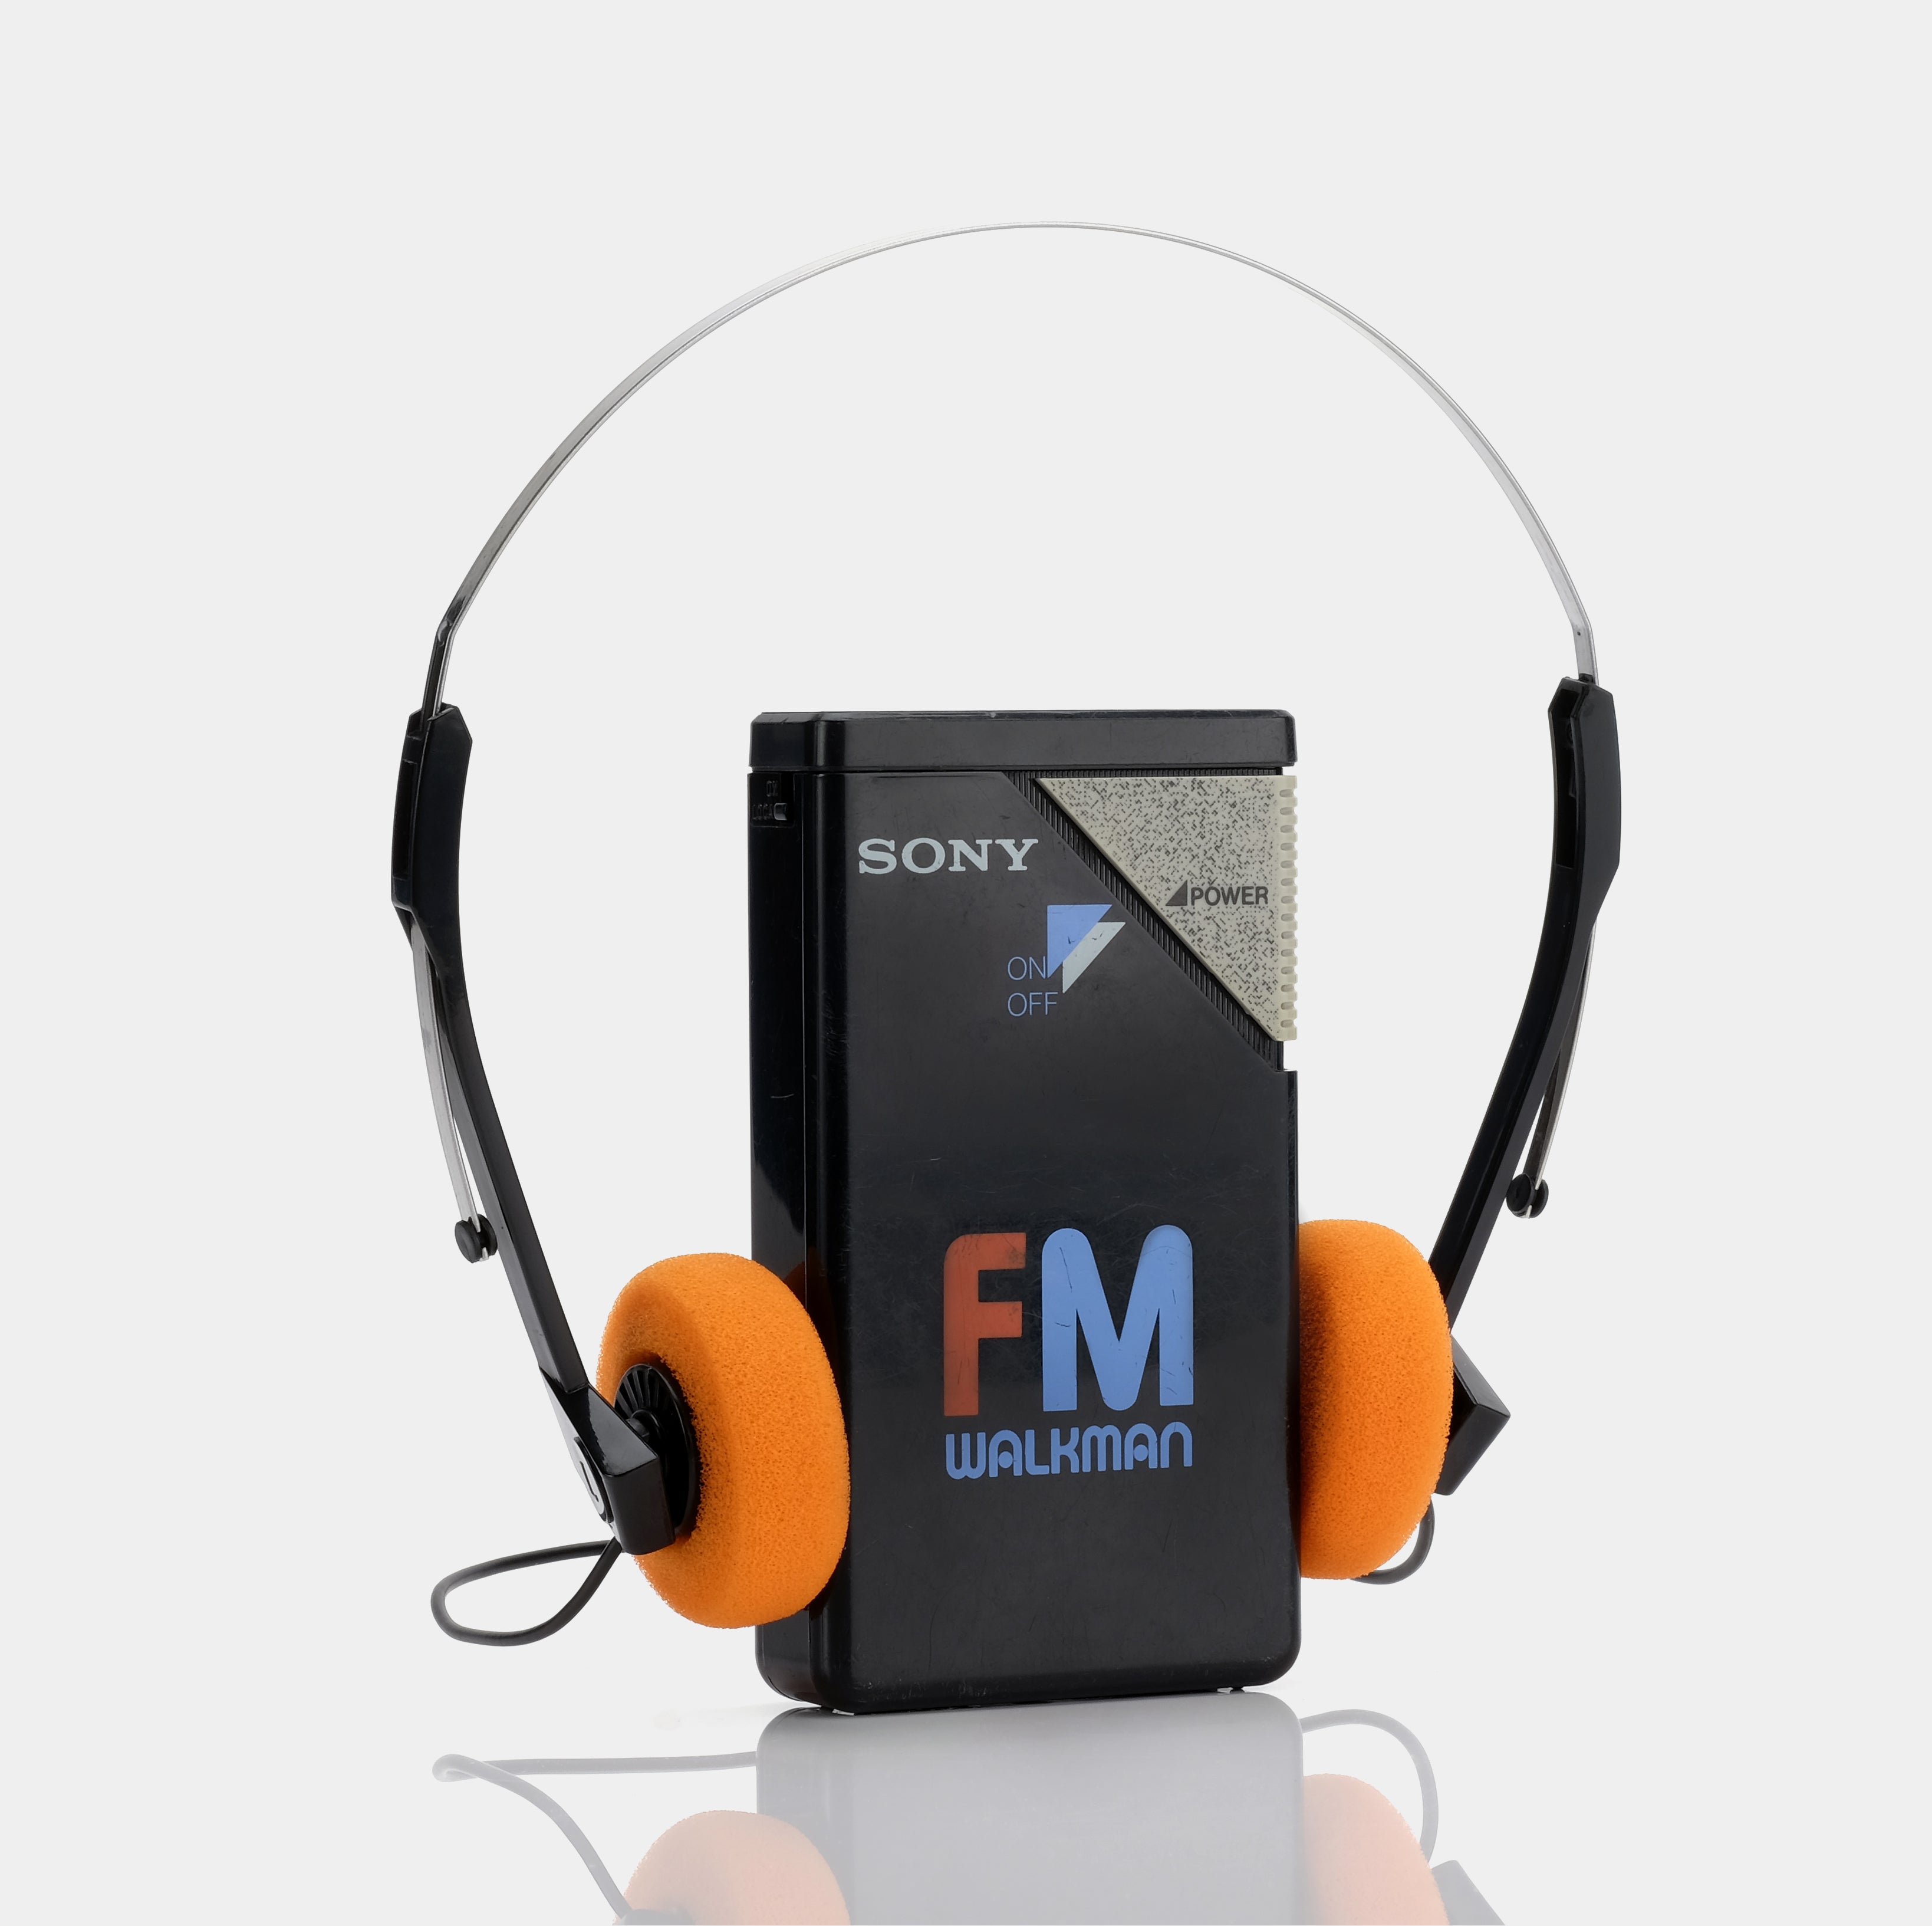 Sony Walkman SRF-16W FM Portable Radio